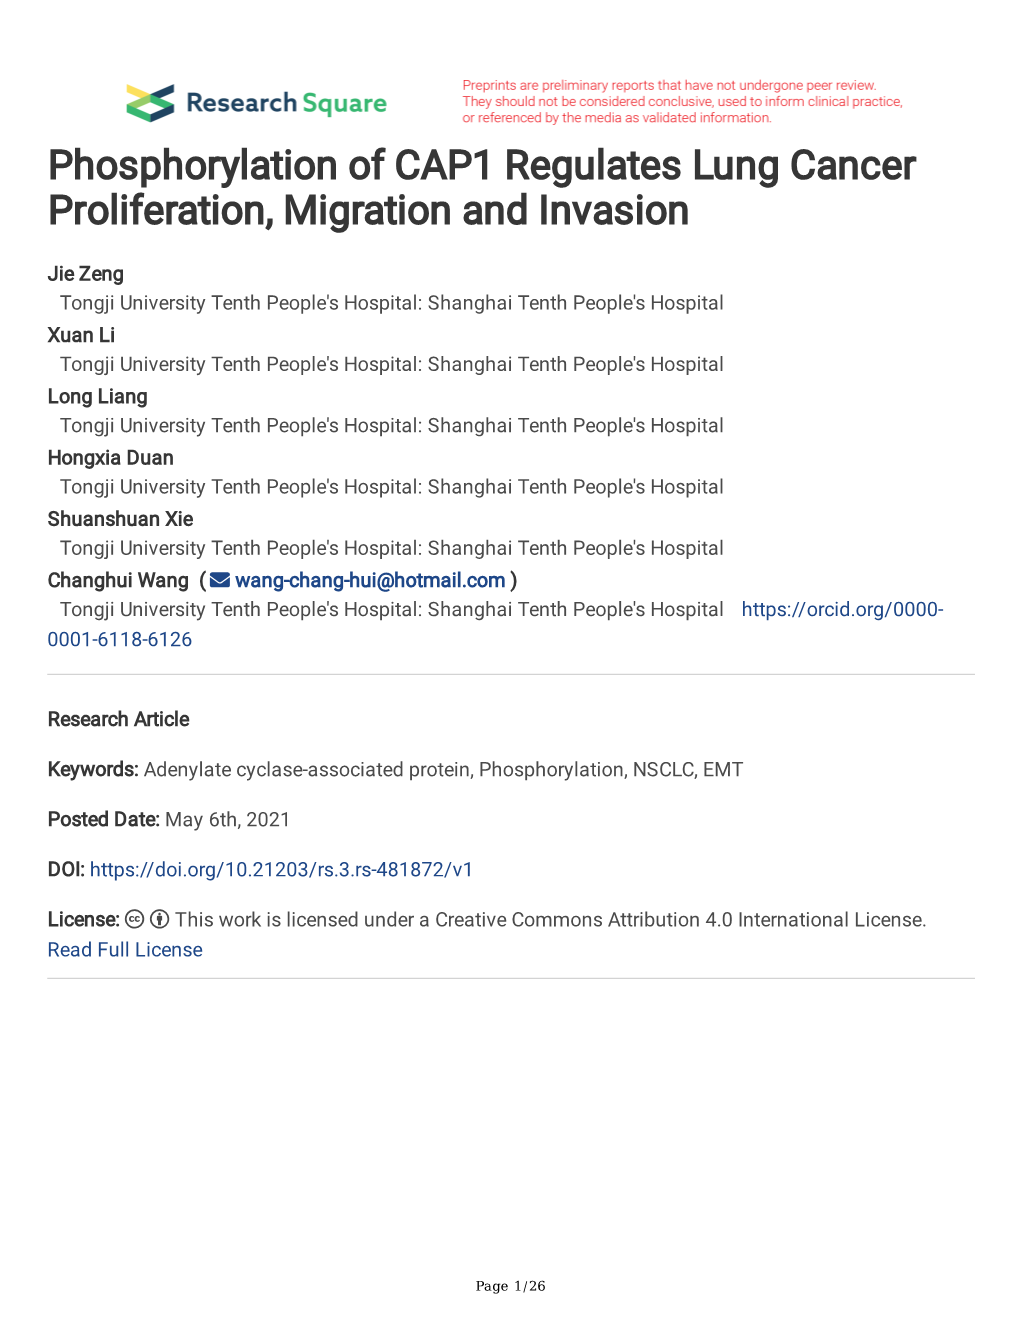 Phosphorylation of CAP1 Regulates Lung Cancer Proliferation, Migration and Invasion